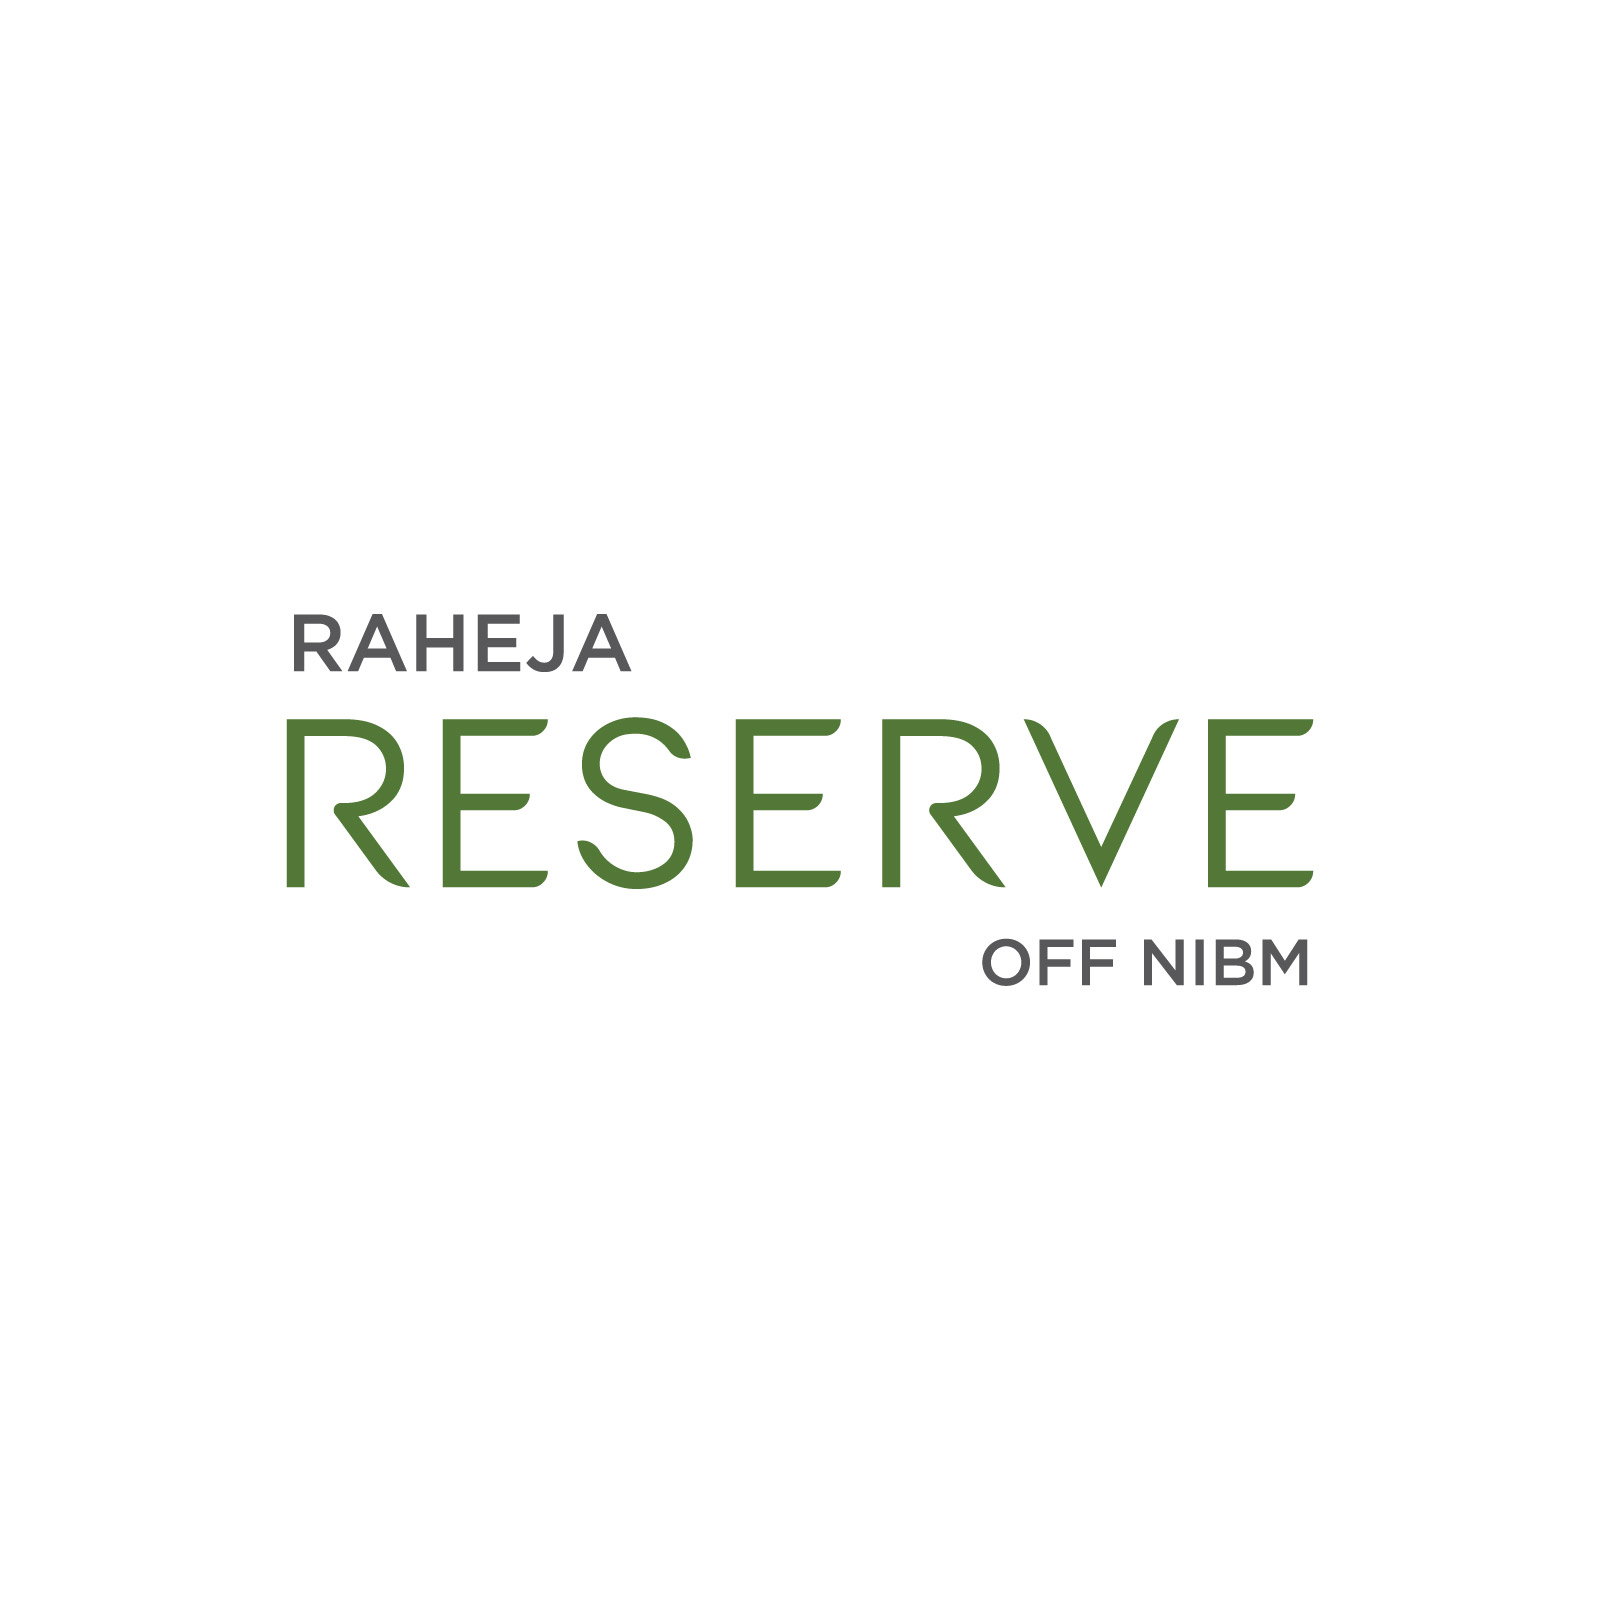 Raheja Reserve